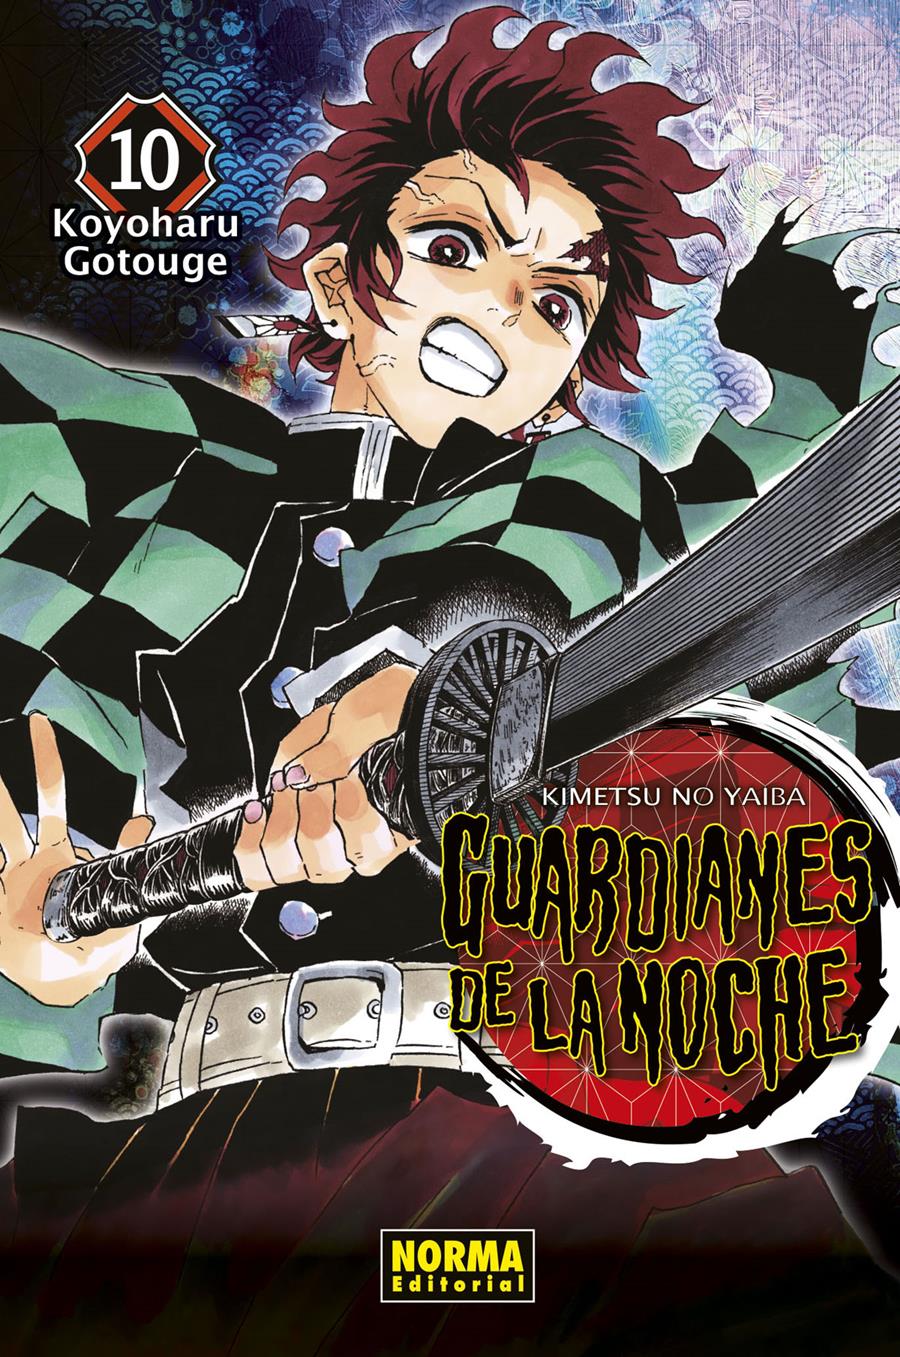 Guardianes de la noche 10 | N0420-NOR23 | Koyoharu Gotouge | Terra de Còmic - Tu tienda de cómics online especializada en cómics, manga y merchandising